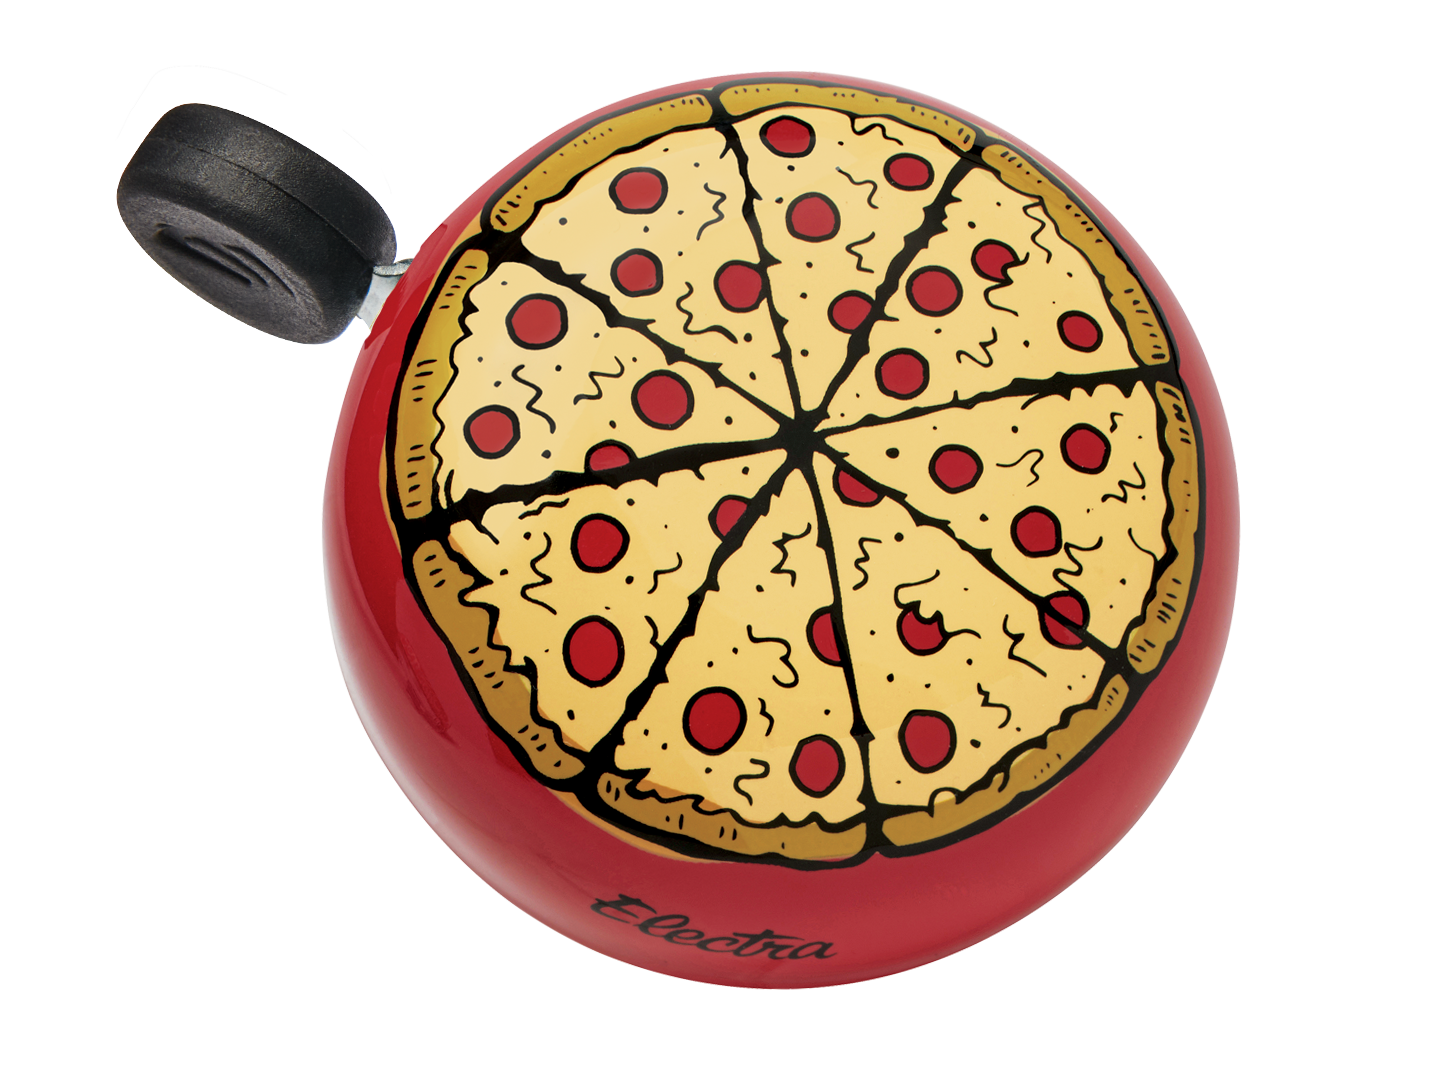 Bell Electra Domed Ringer Pizza